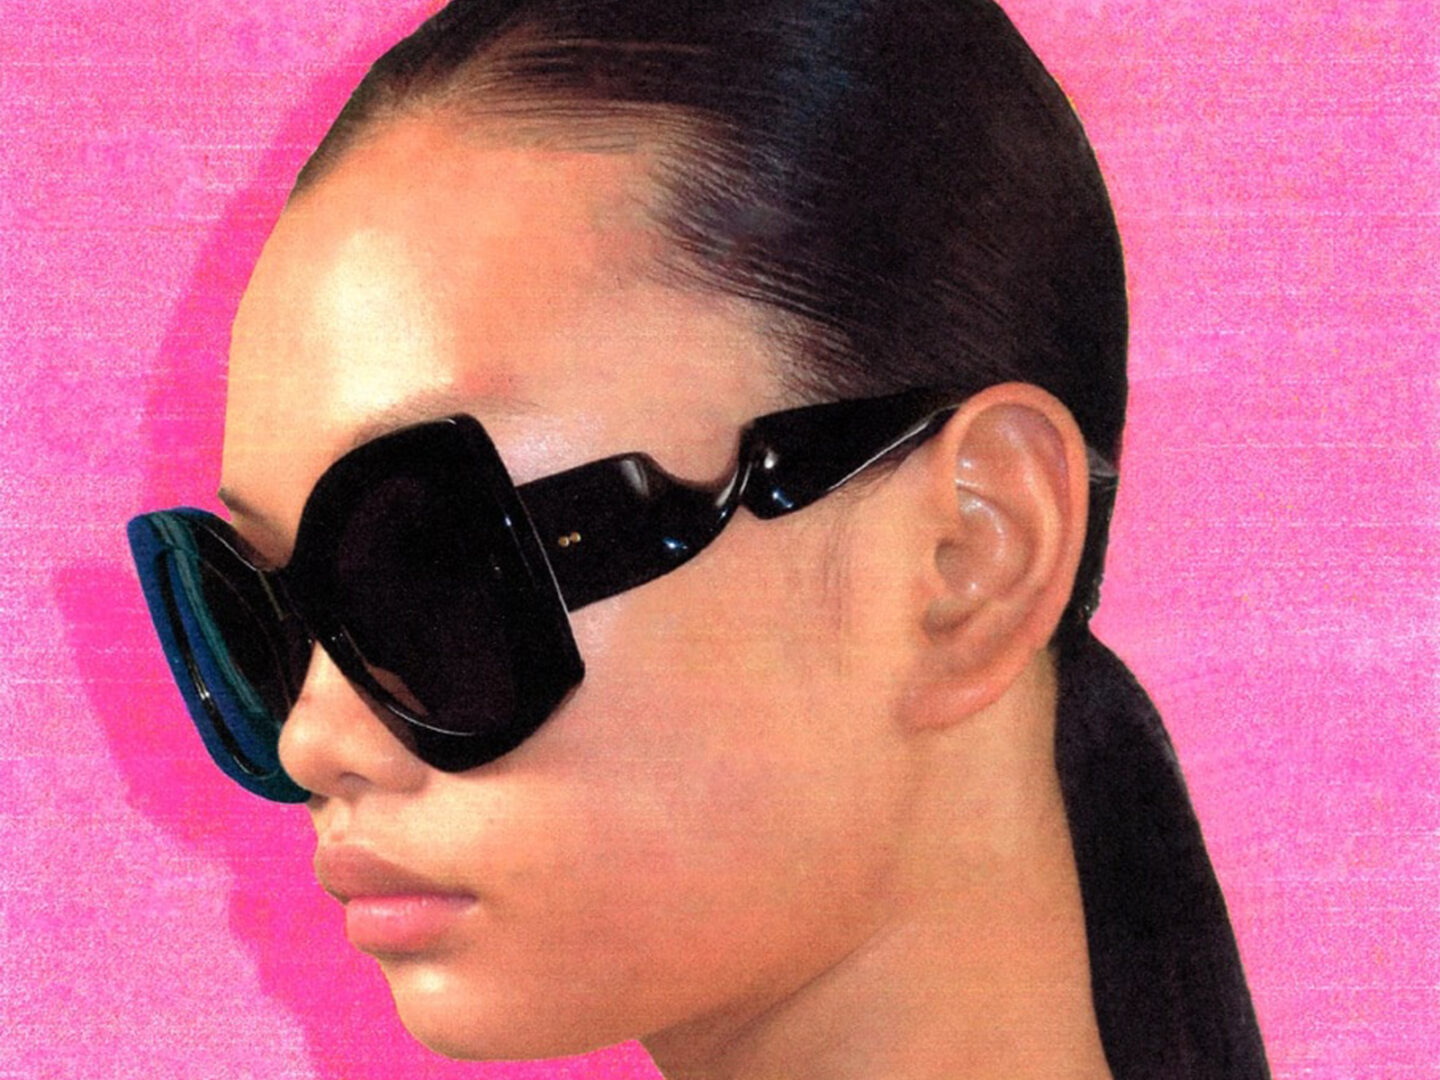 JW Anderson offers daring eyewear silhouettes